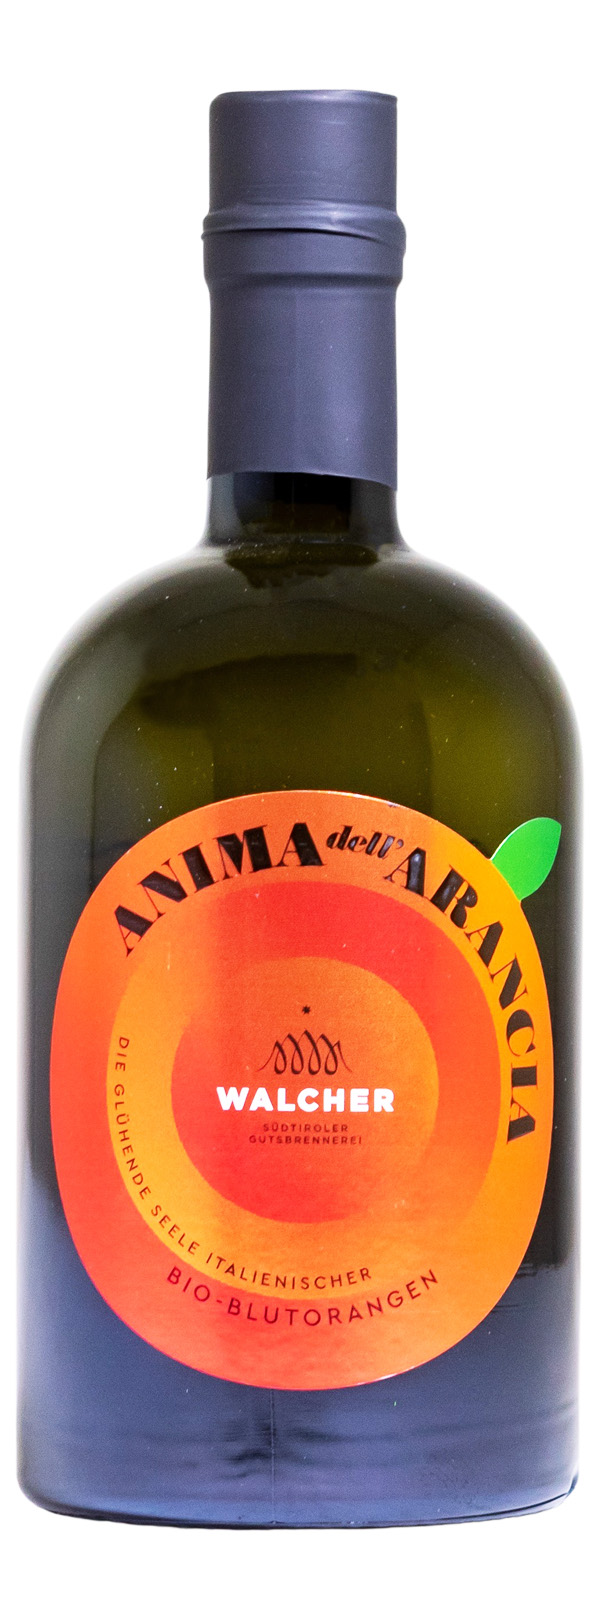 Walcher Anima dellArancia Orangenlikör - 0,5L 40% vol